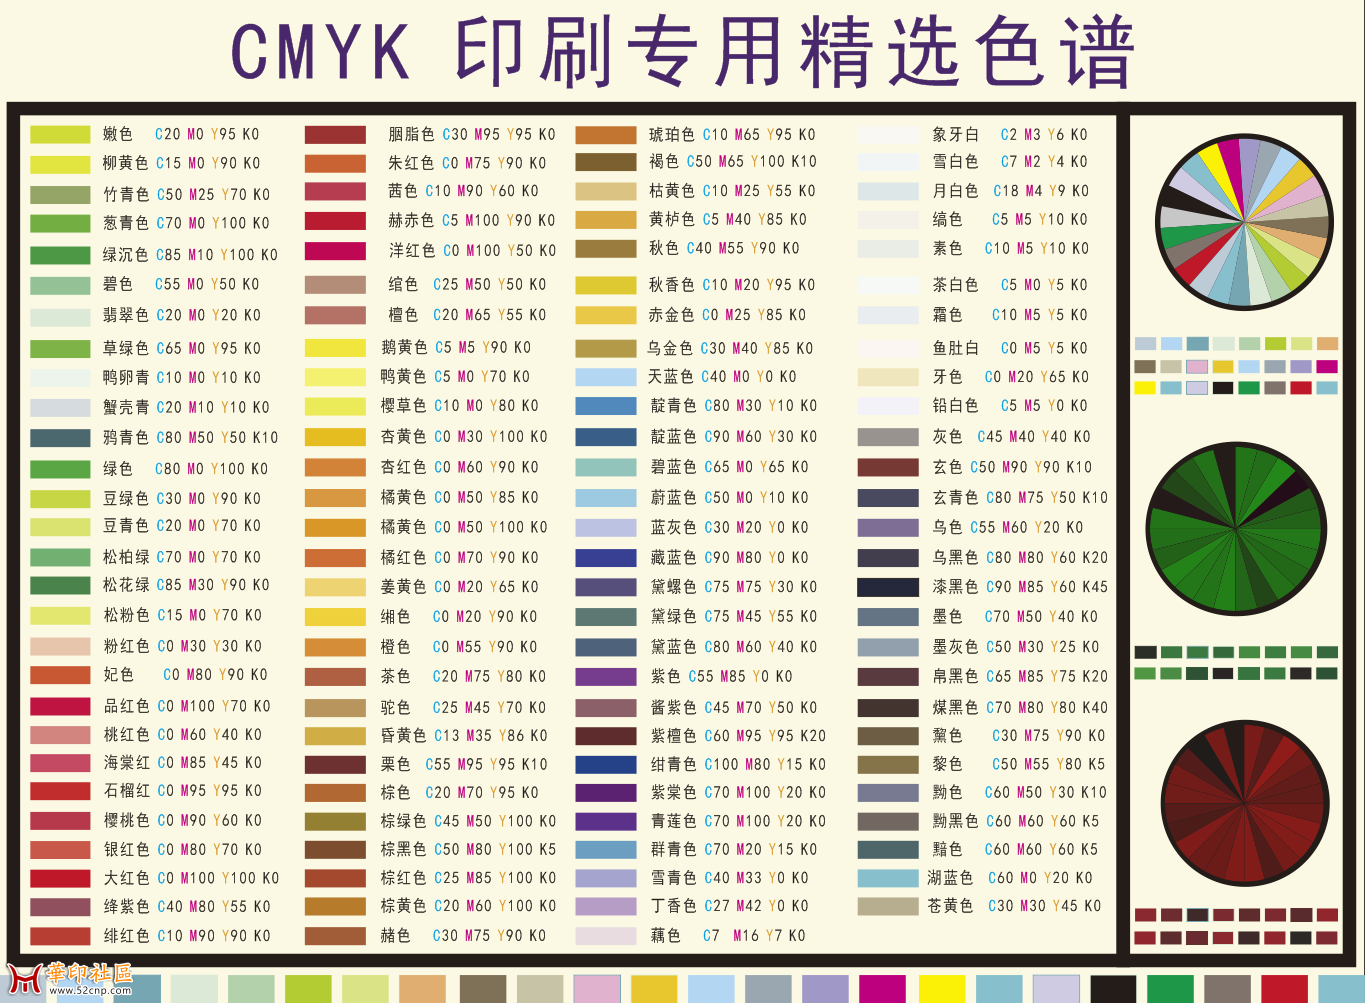 CMYK印刷用精选色谱.png